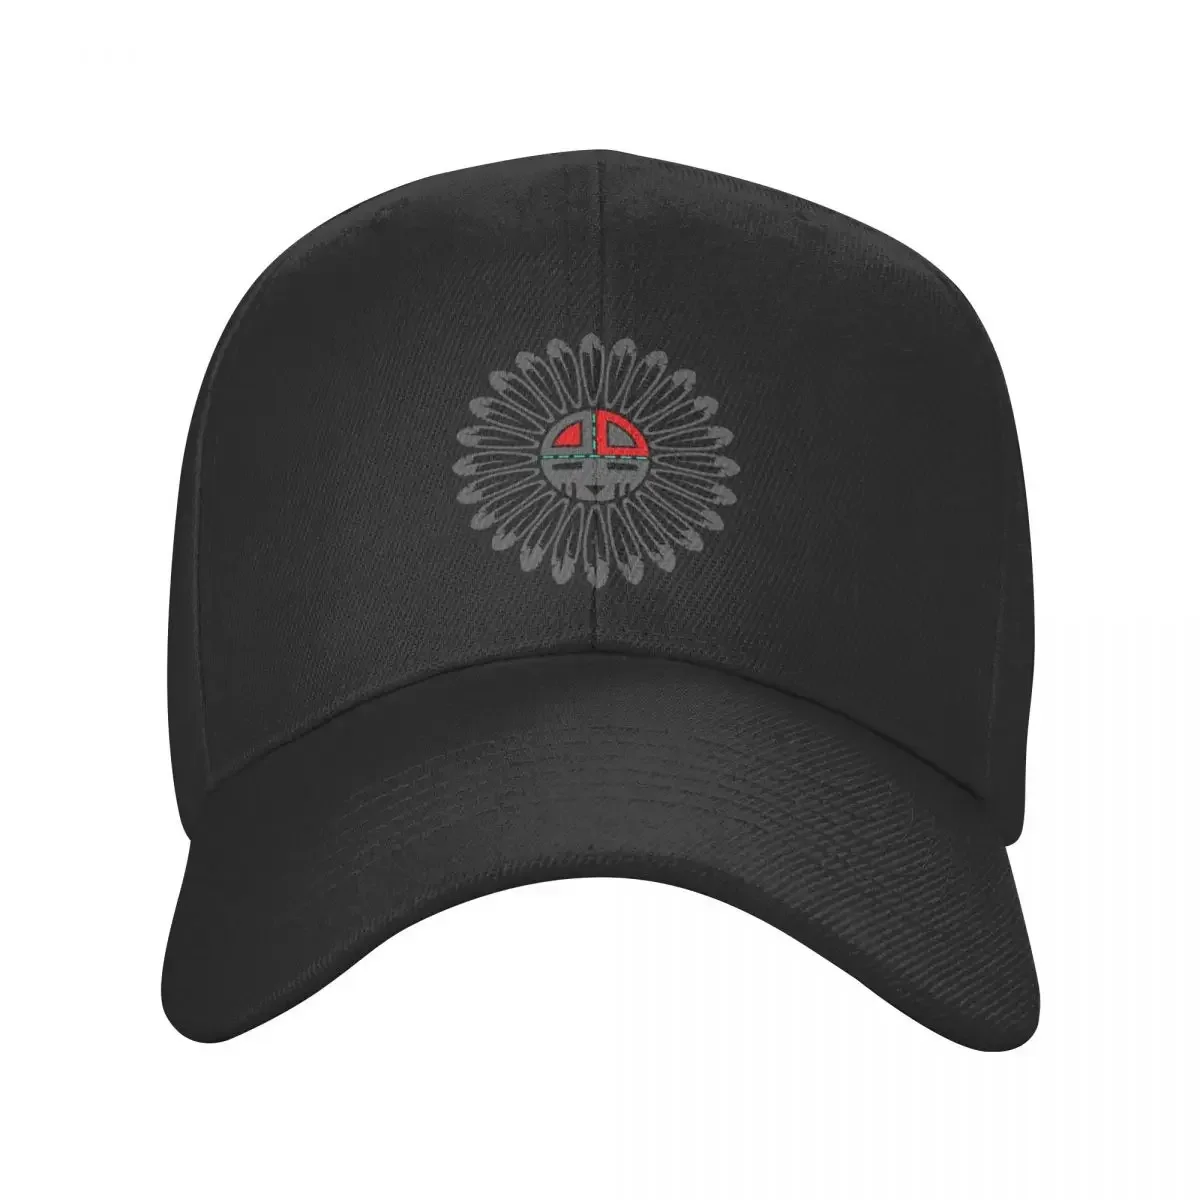 HOPI SUN 11 Cap baseball cap baseball cap for men Women's